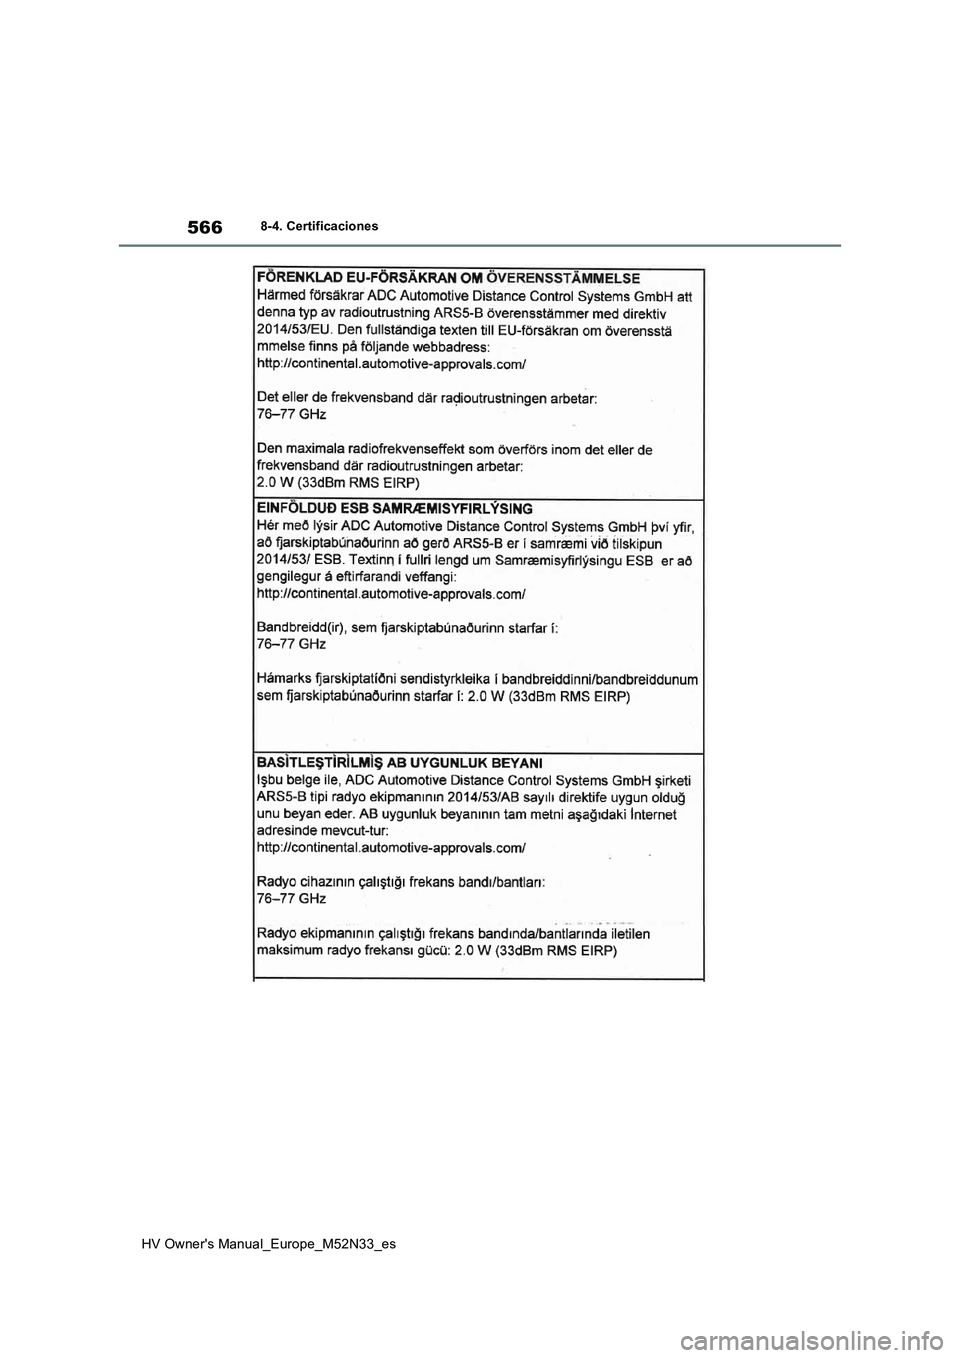 TOYOTA YARIS 2022  Manuale de Empleo (in Spanish) 566
HV Owner's Manual_Europe_M52N33_es
8-4. Certificaciones 